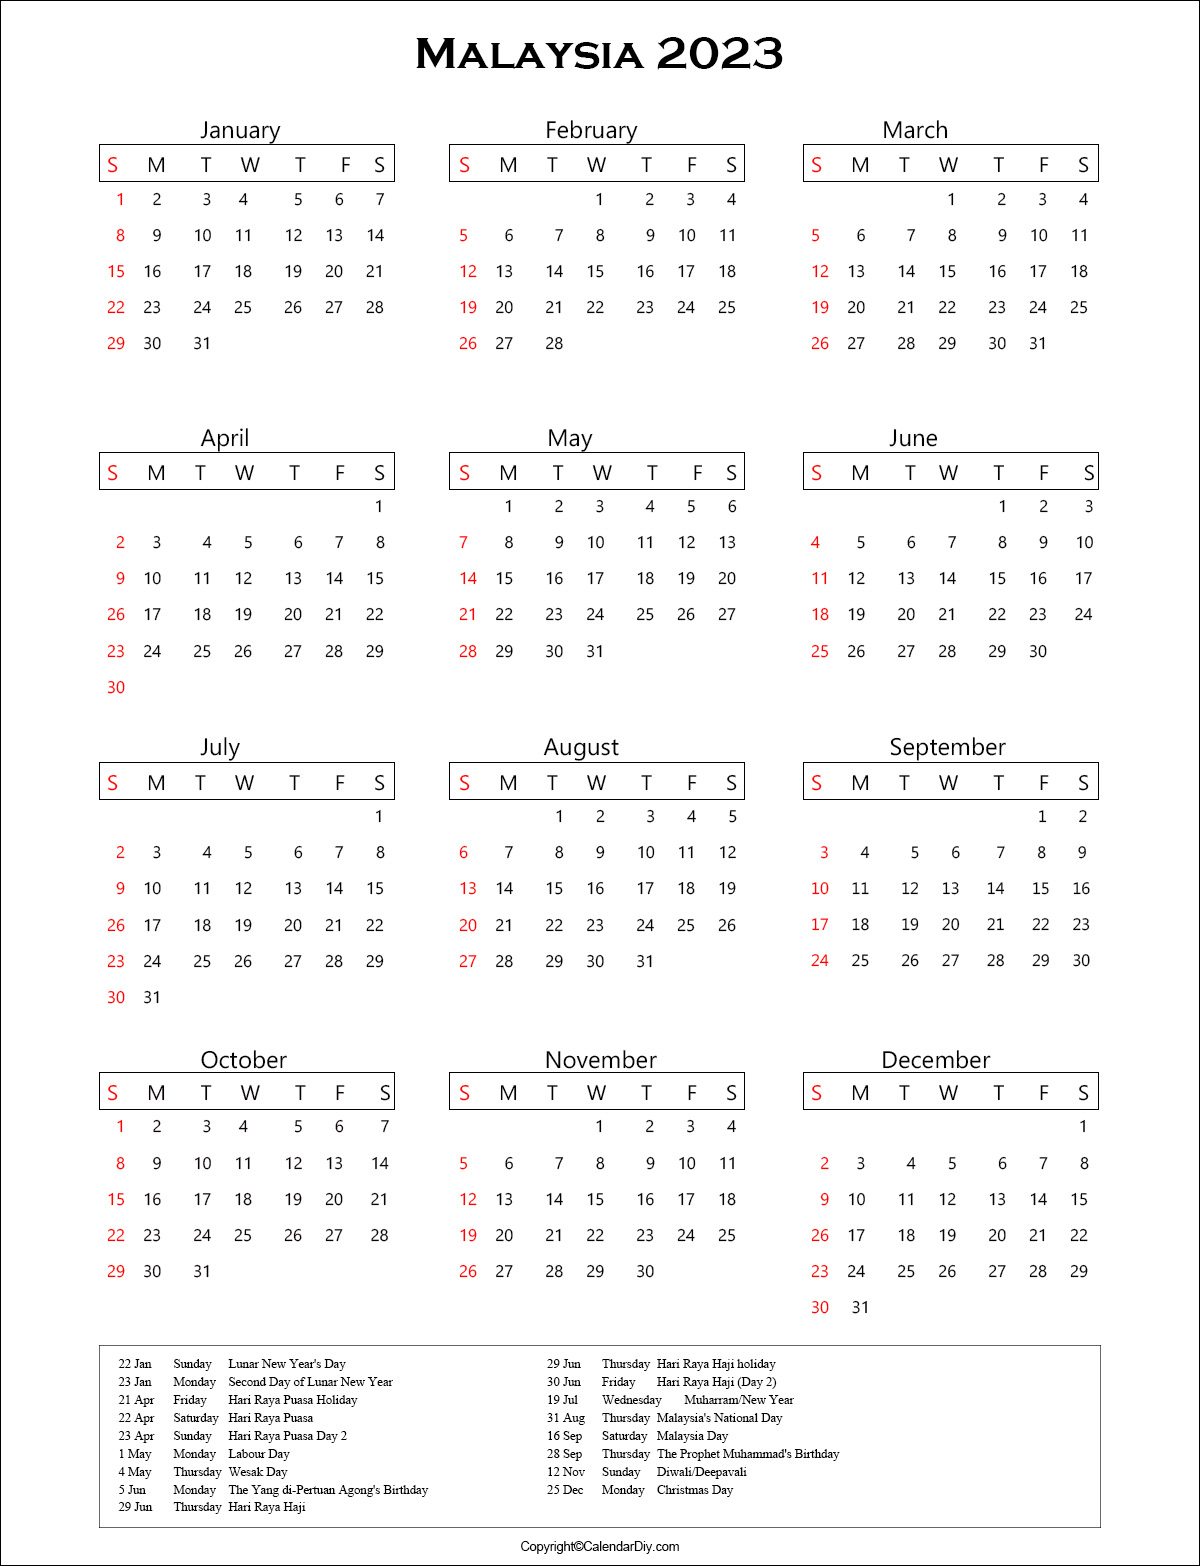 Malaysia Calendar 2023 with Holidays [Public Holidays]